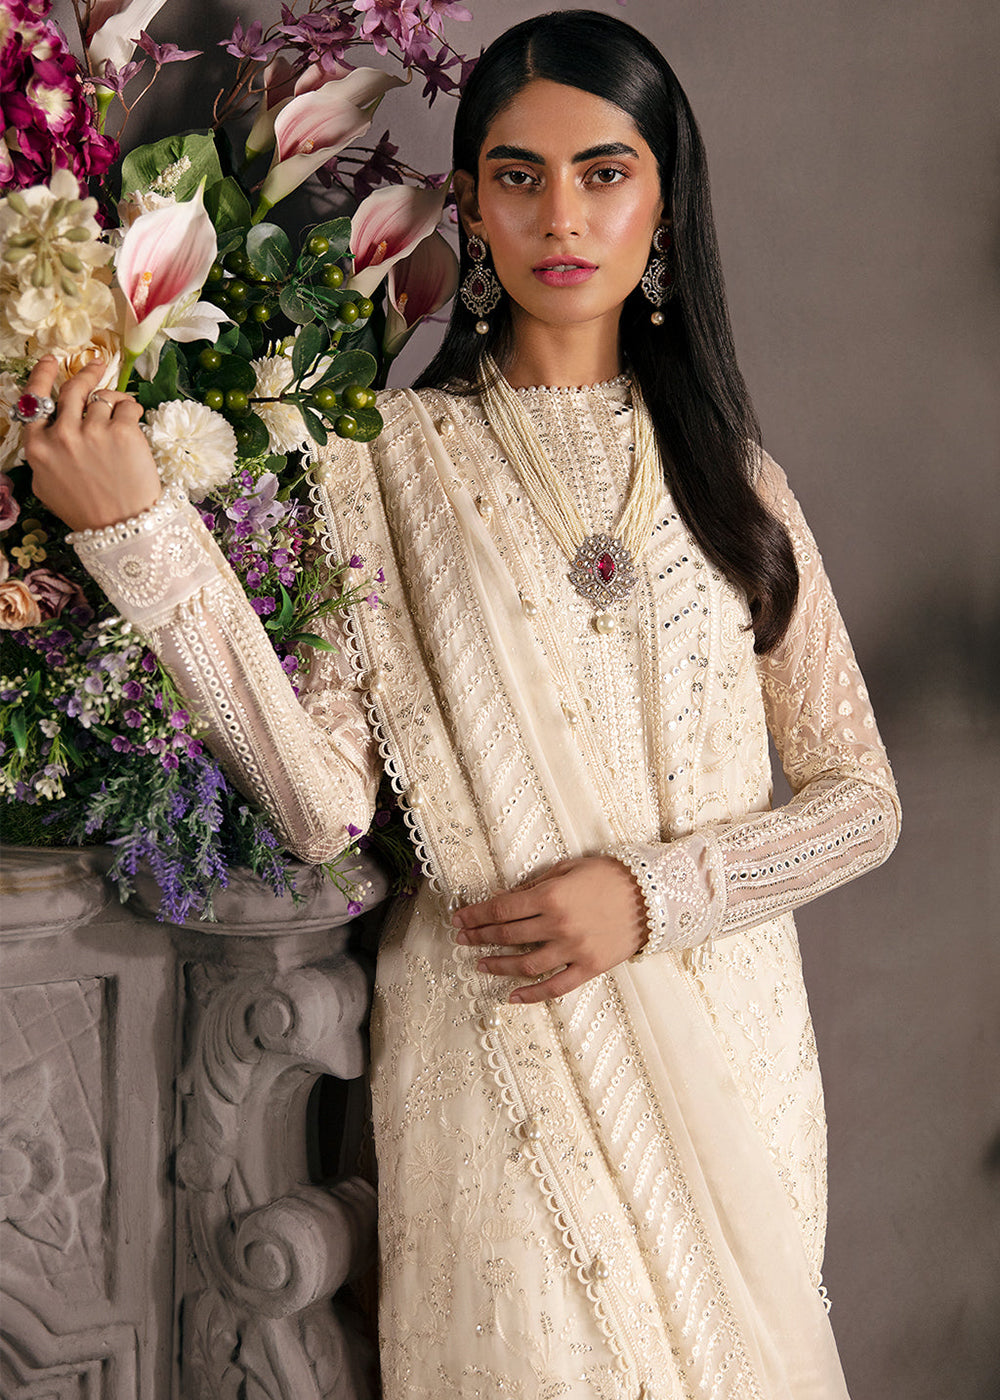 Buy Now Off White Pakistani Salwar Suit - Afrozeh La Fuchsia Formals '23 - Daisy Glow Online in USA, UK, Canada & Worldwide at Empress Clothing.